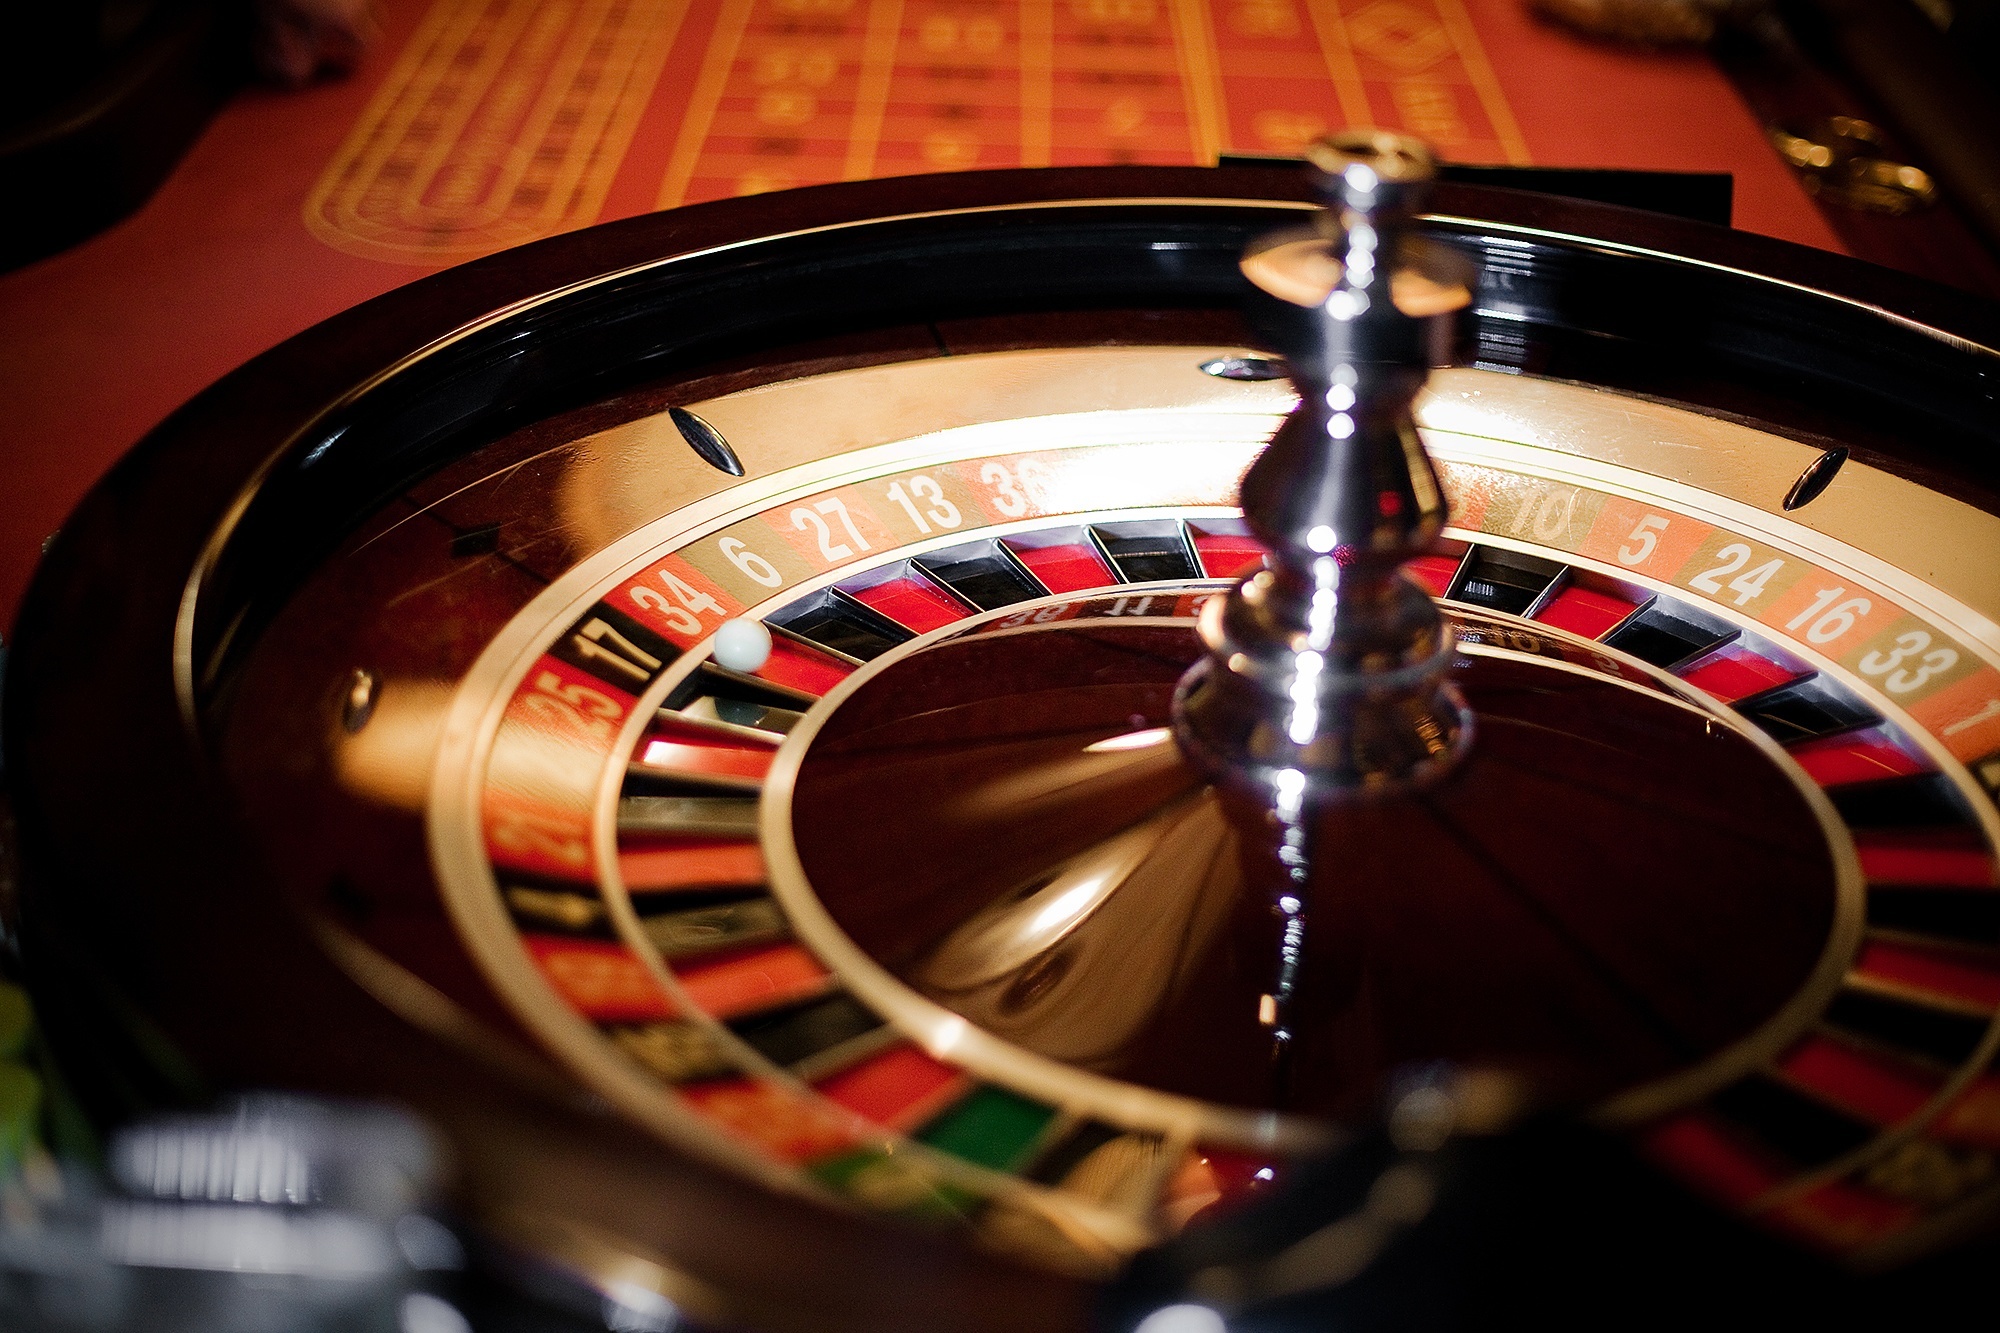 New penny slots at casinos